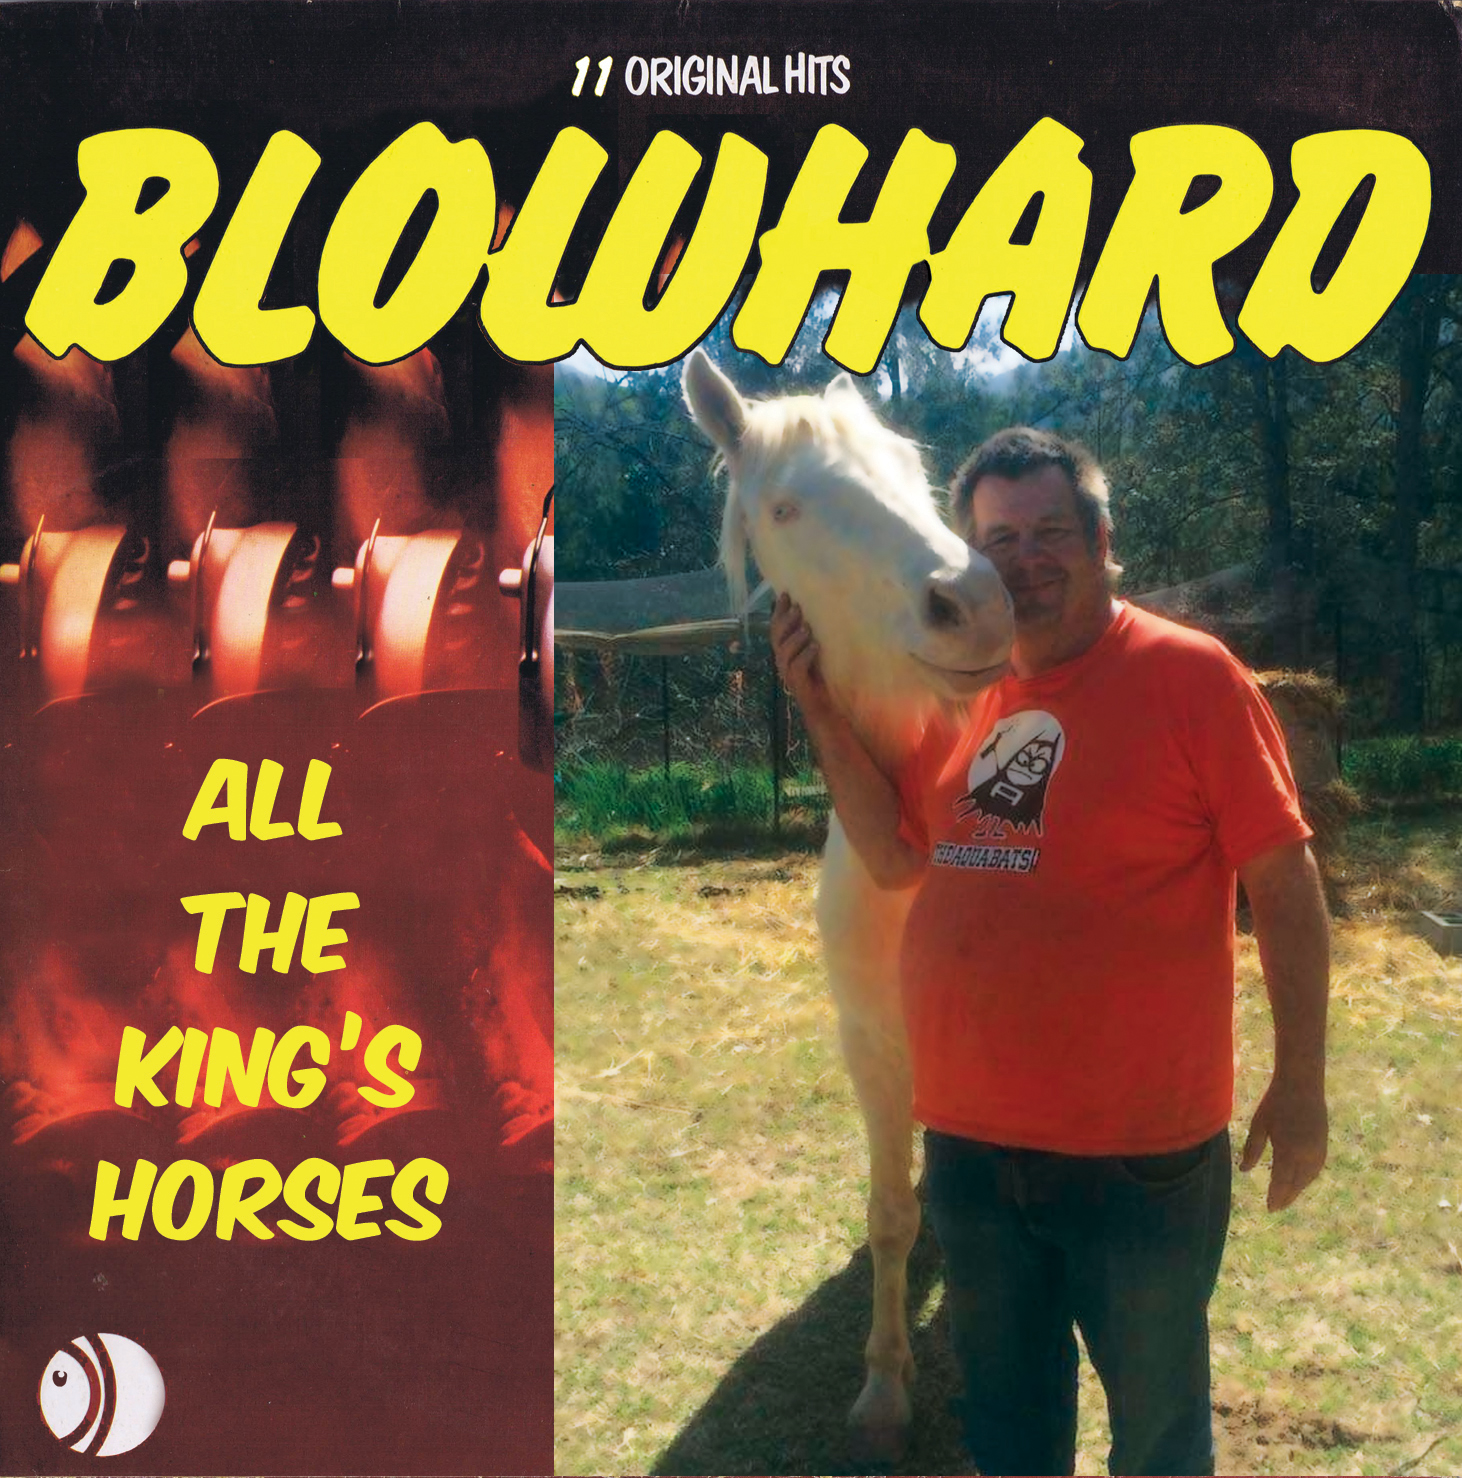 Blowhard – All The King’s Horses